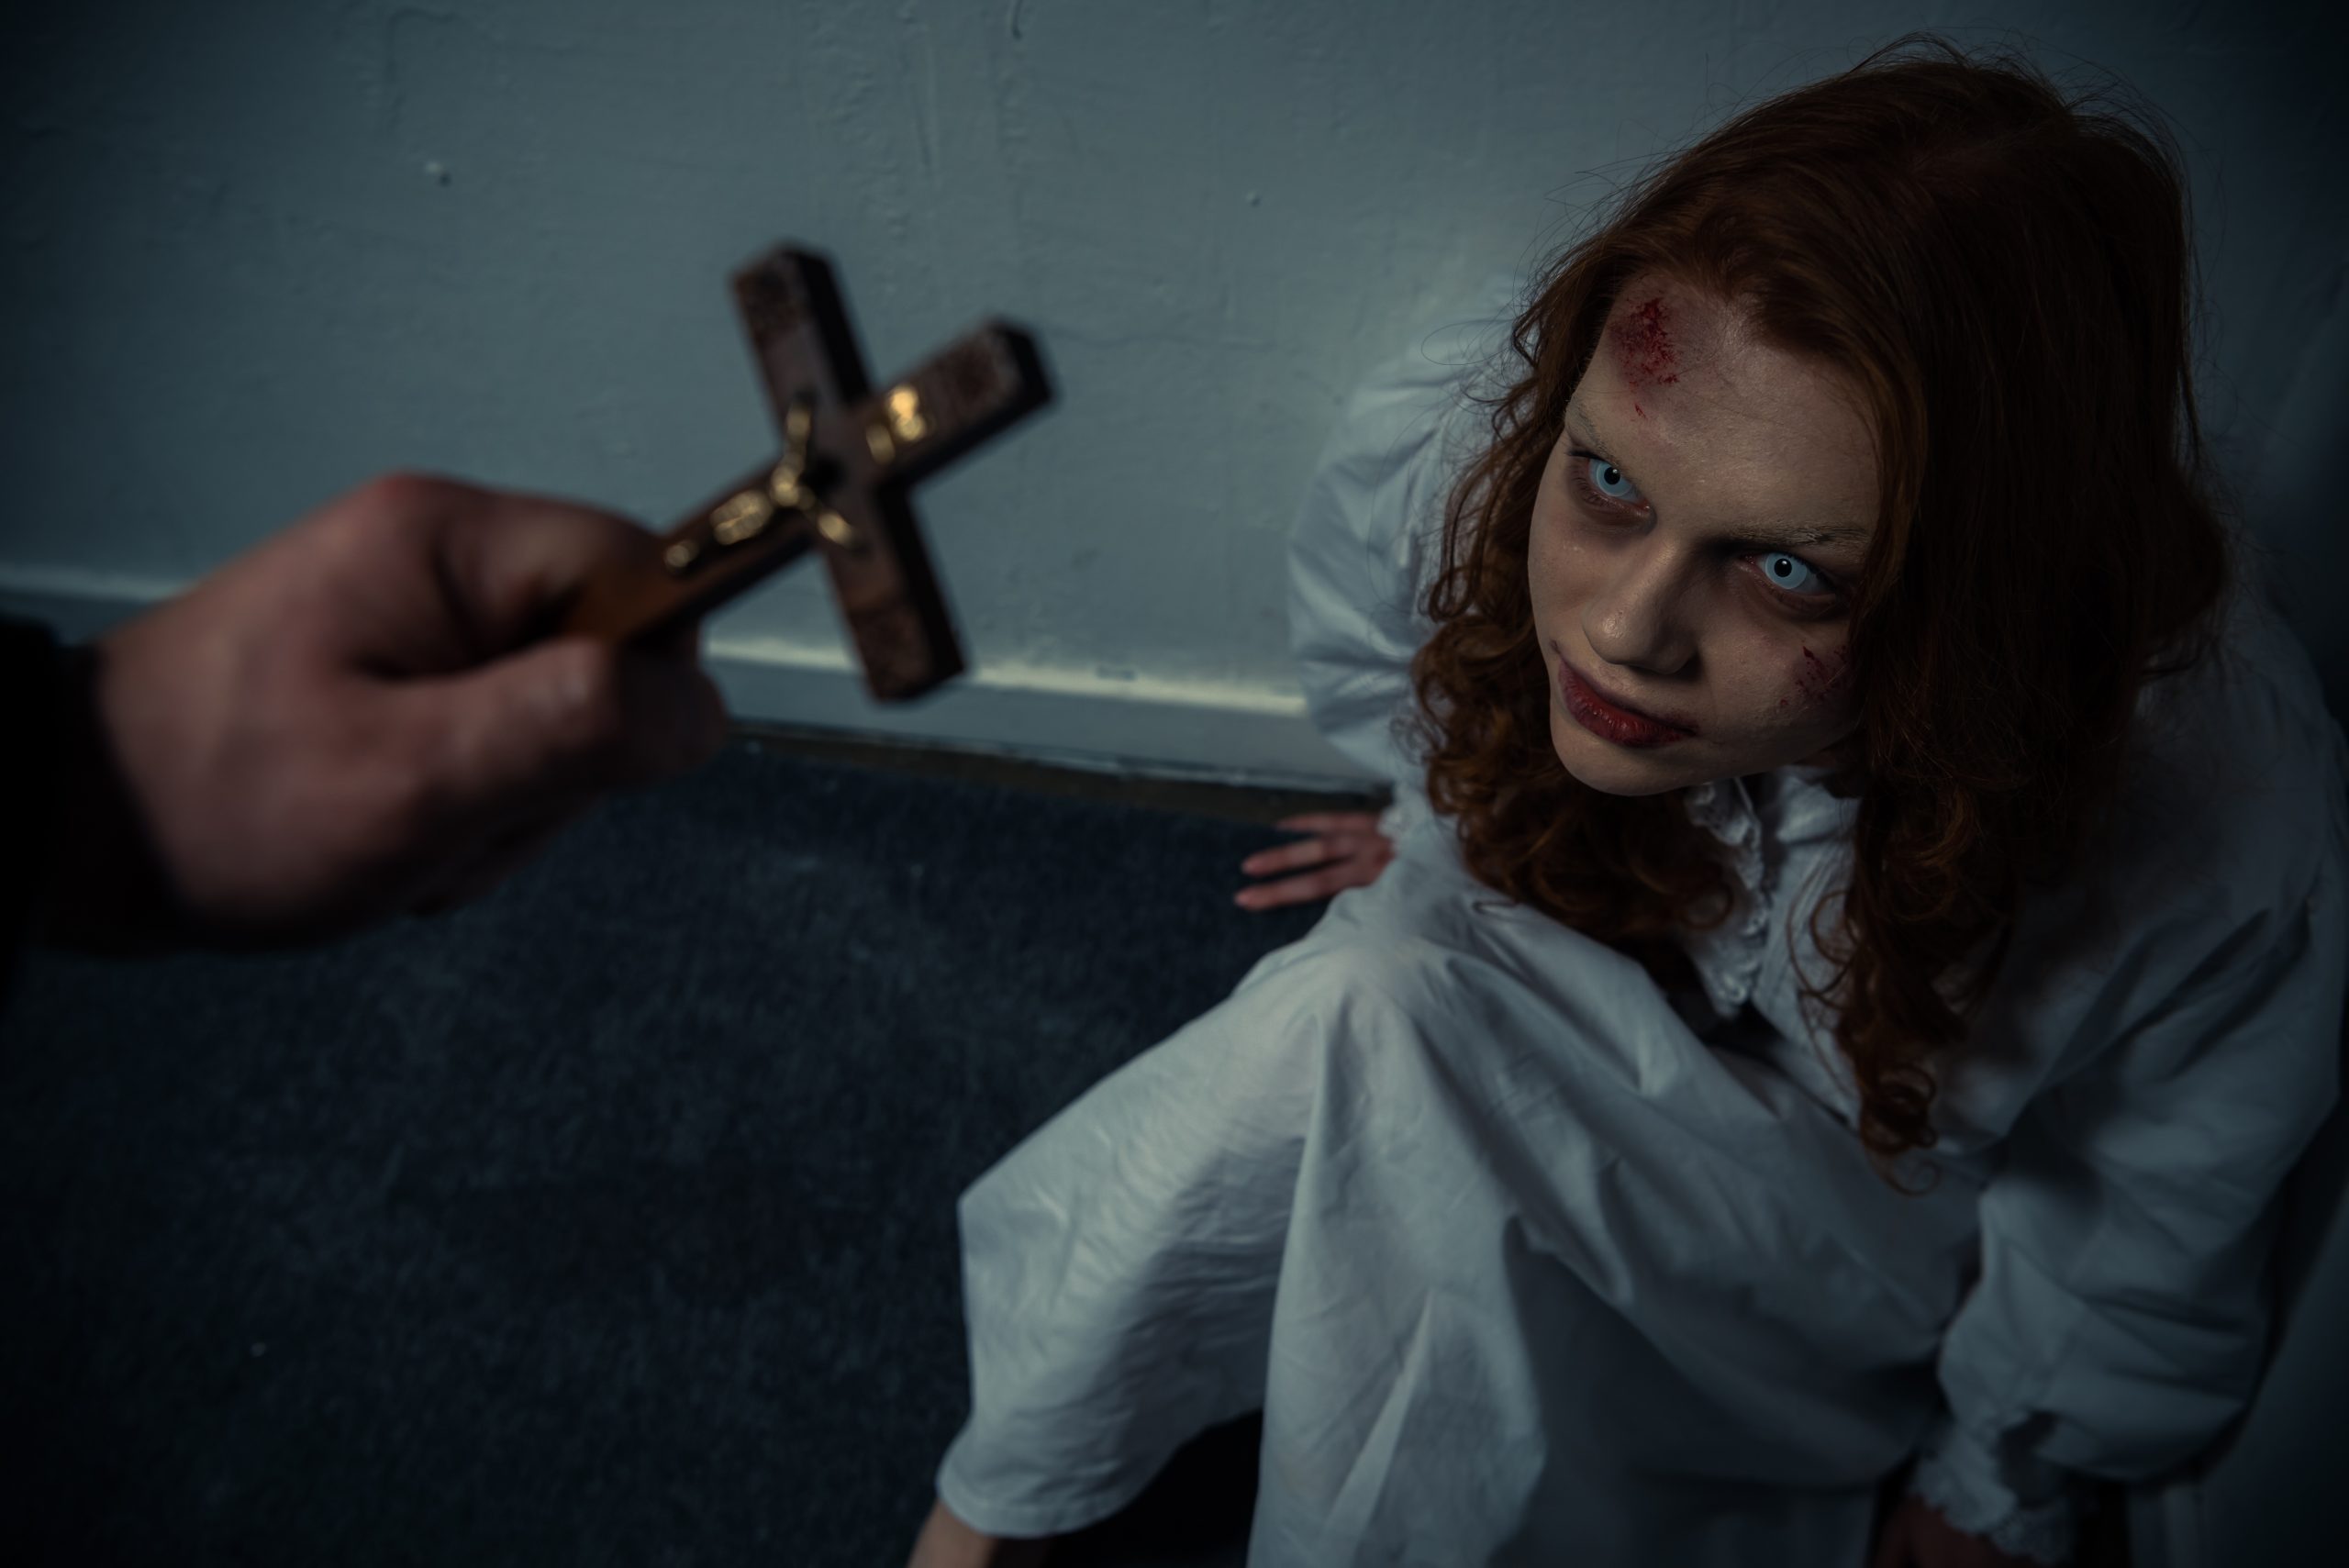 A demon possessed girl similar to The Exorcist